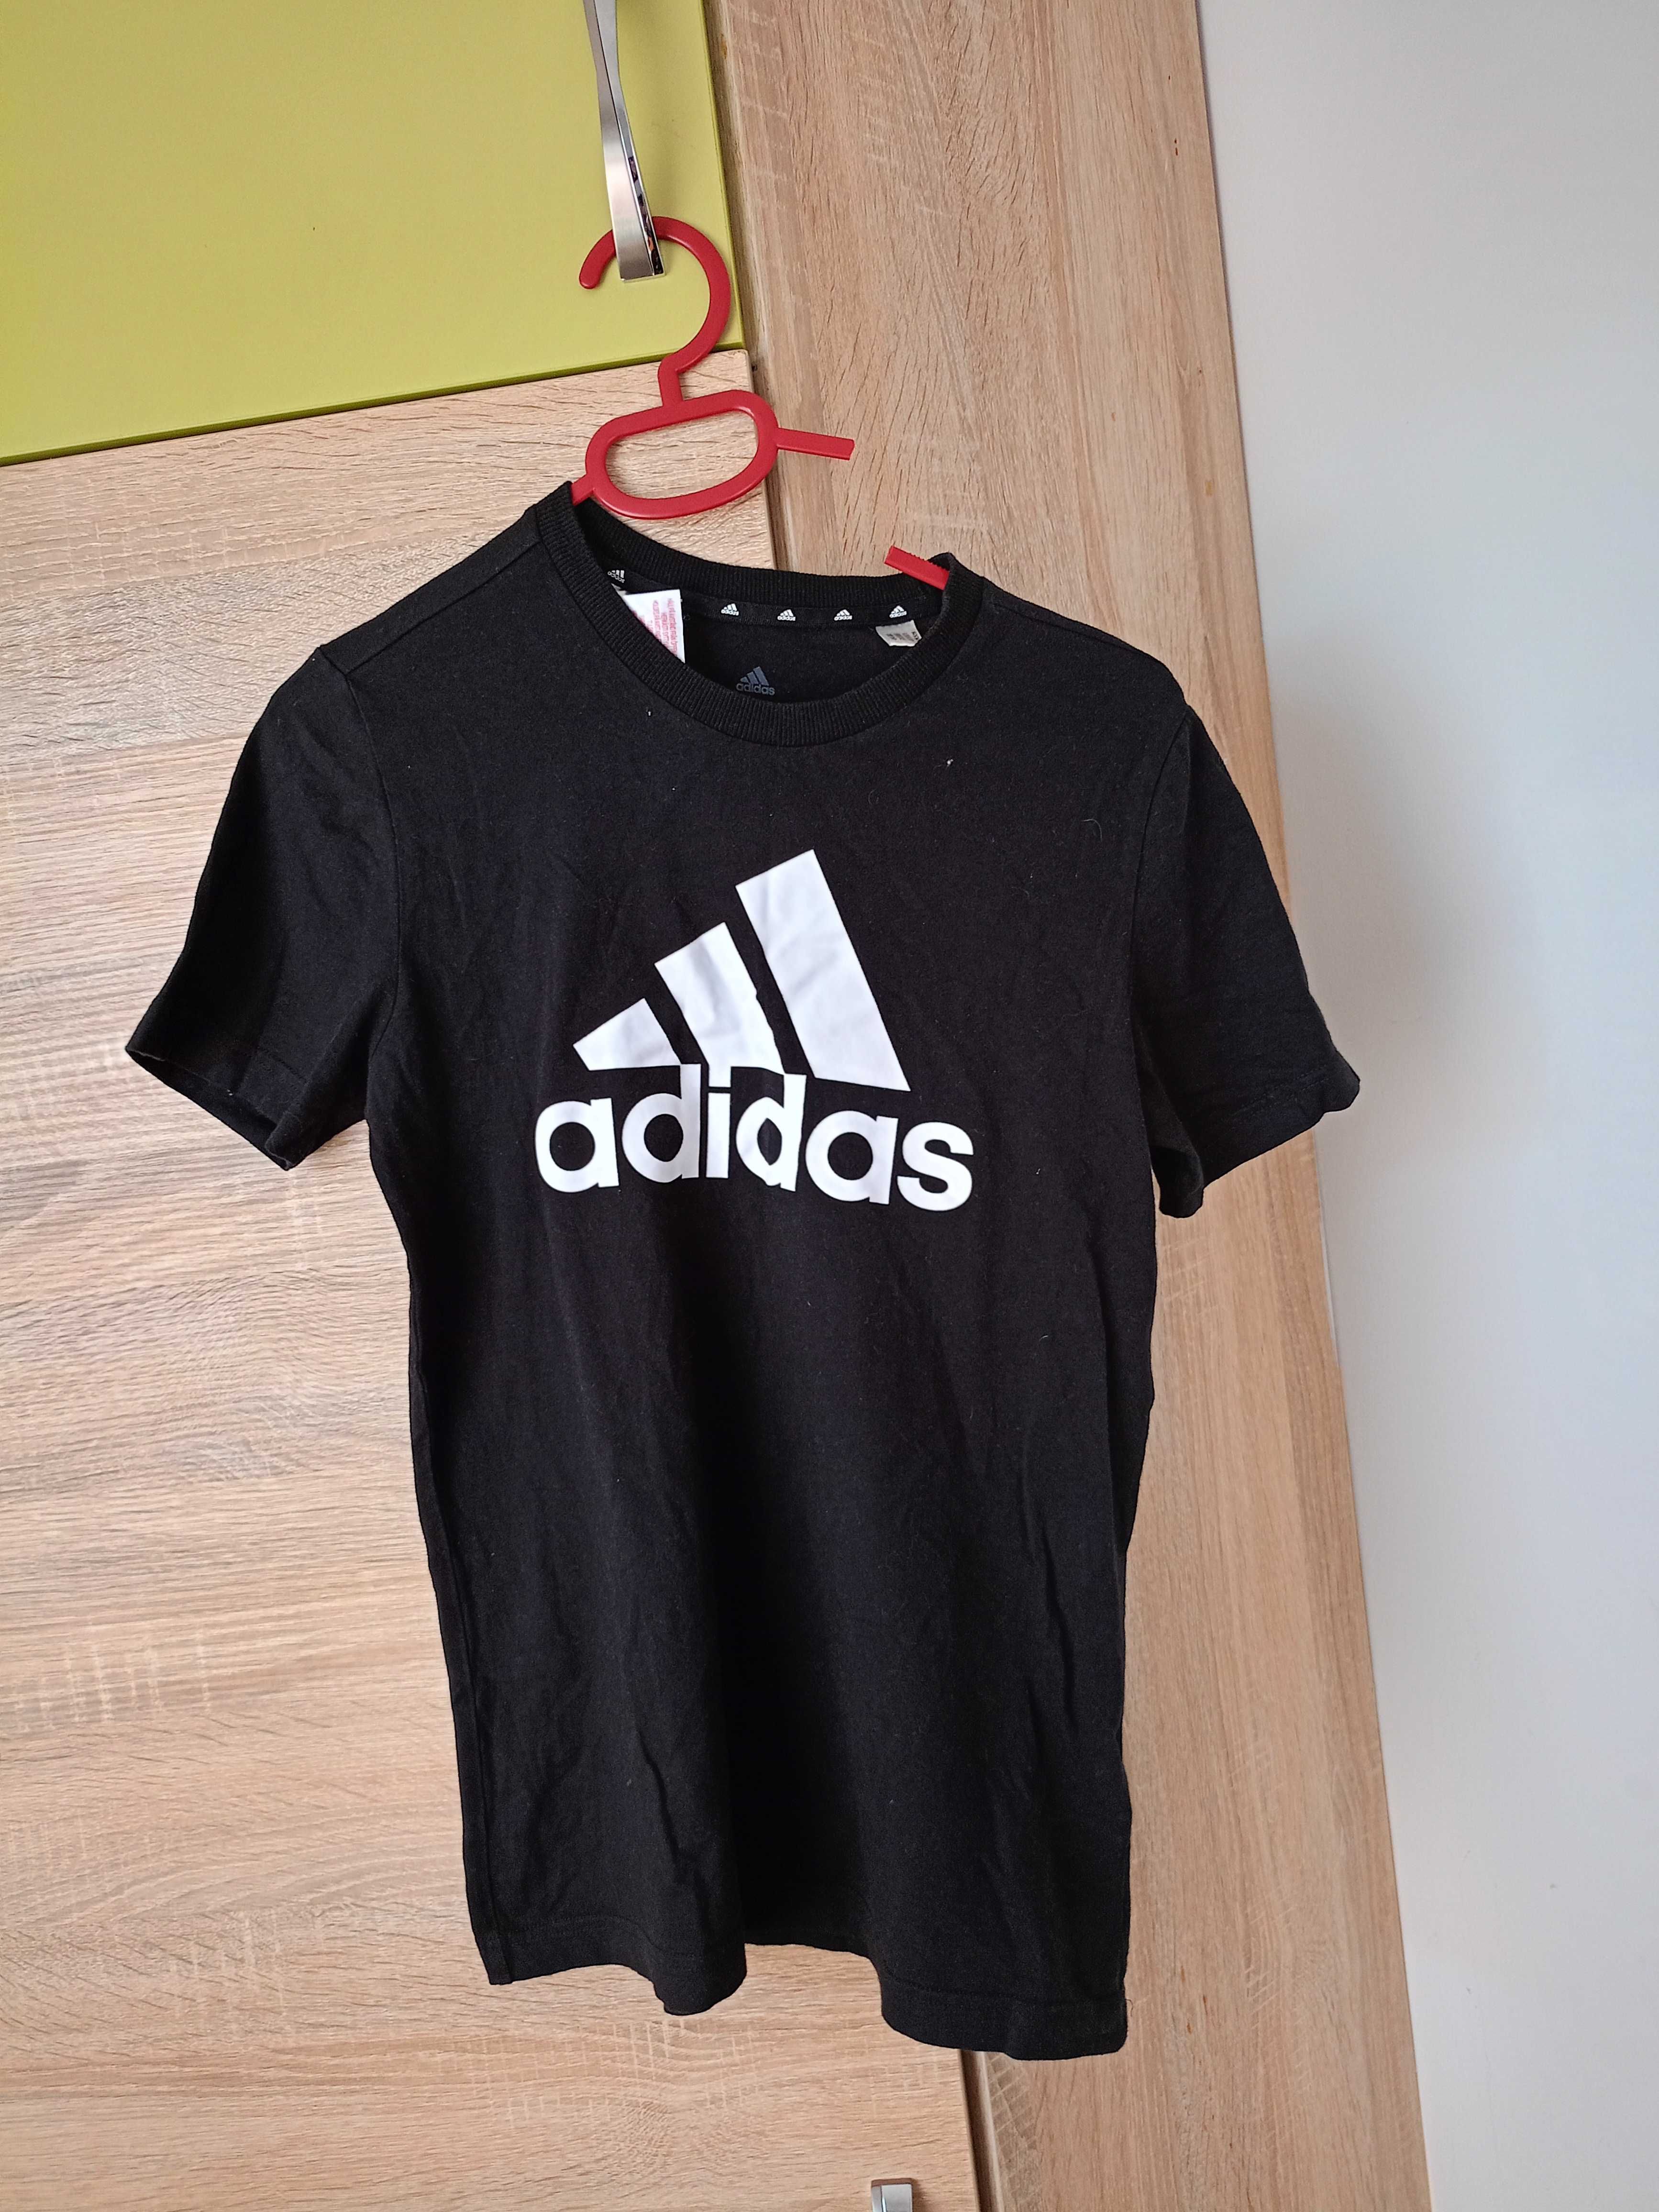 Adidas koszulka t-shirt chłopak S